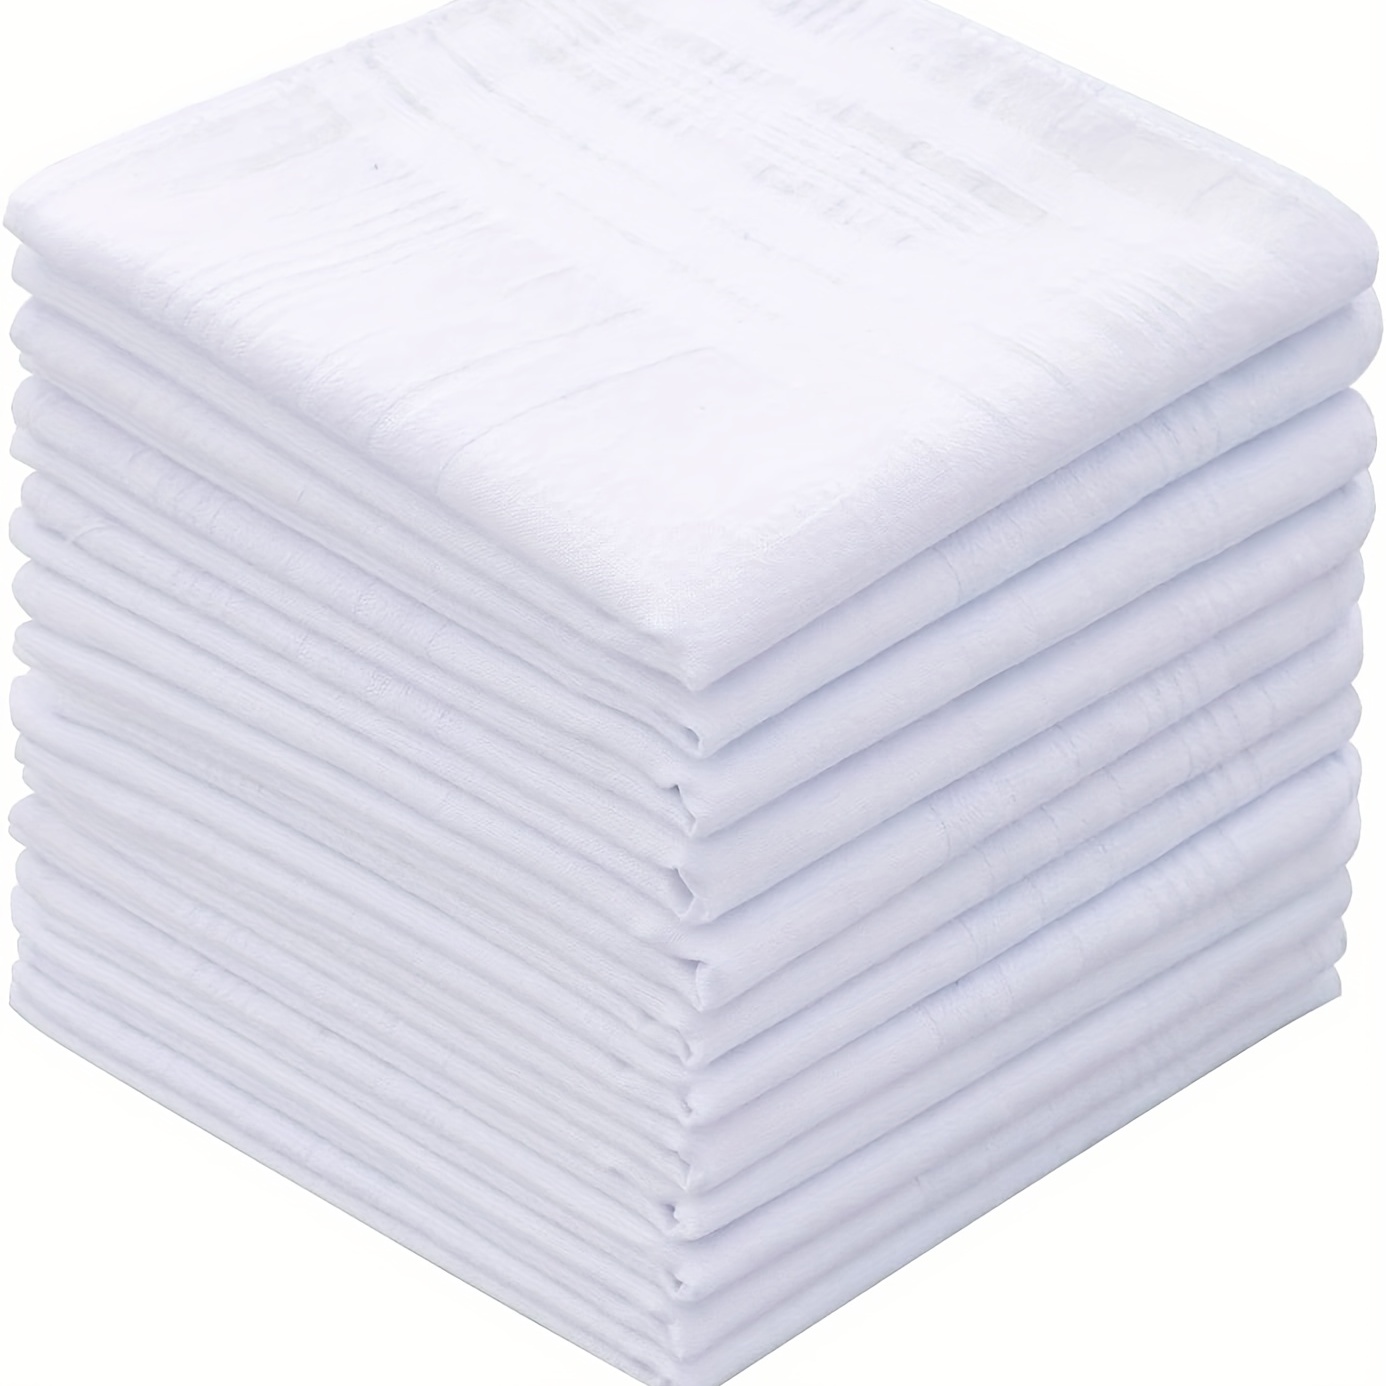 12pcs set 17 white cotton square scarves simple thin breathable handkerchiefs breathable sweating handkerchiefs plain casual hankies accessories